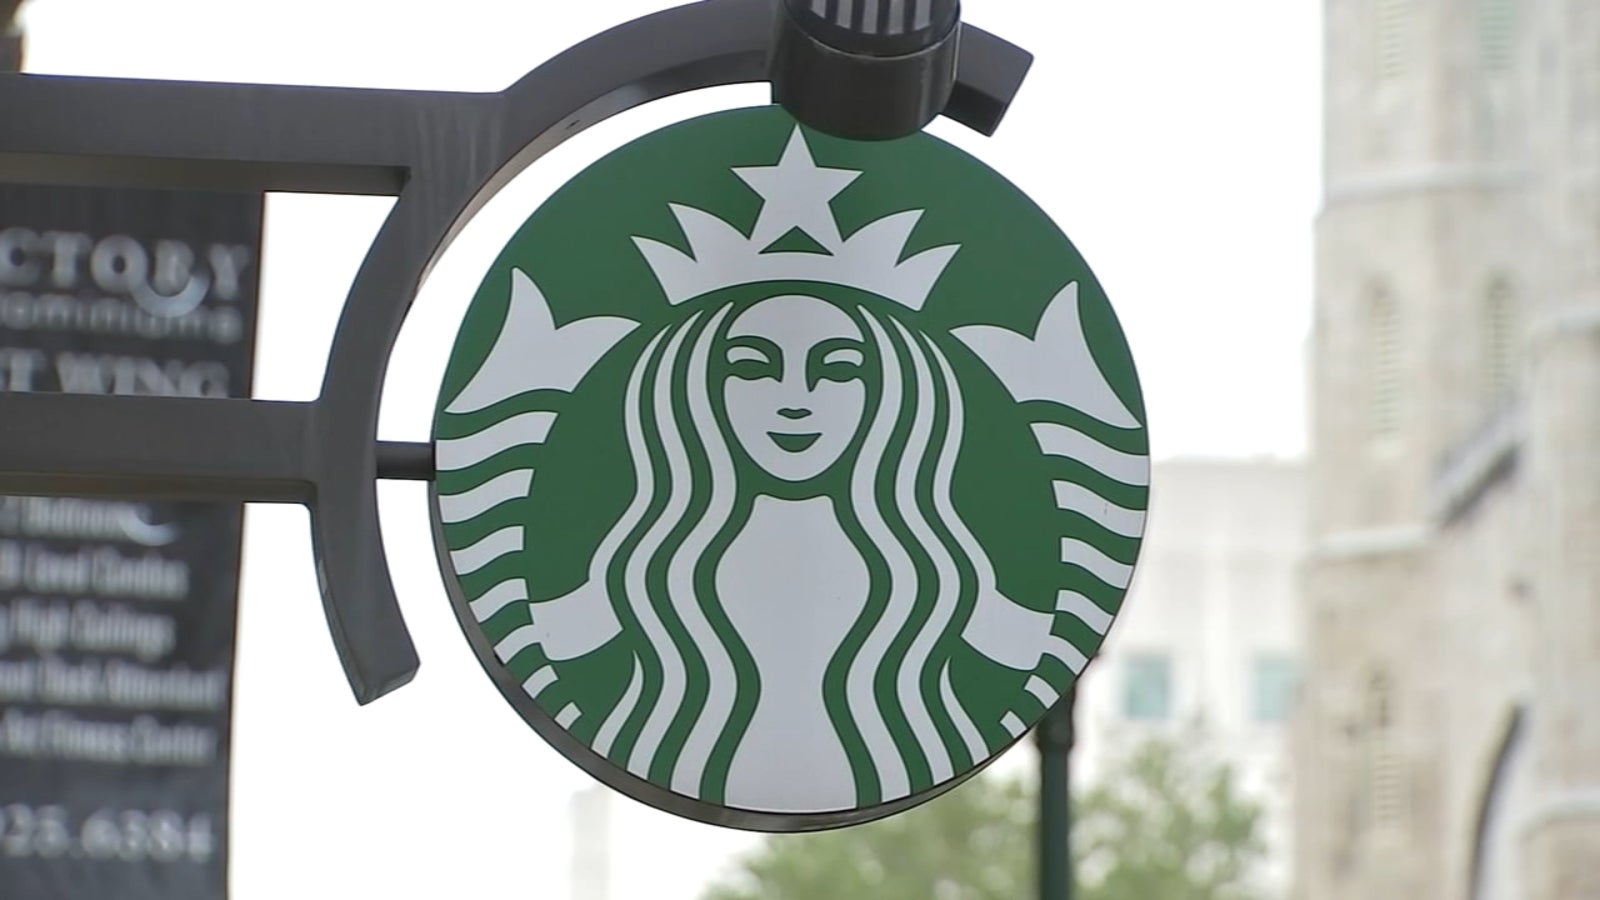 How Starbucks Got Its Literary Name